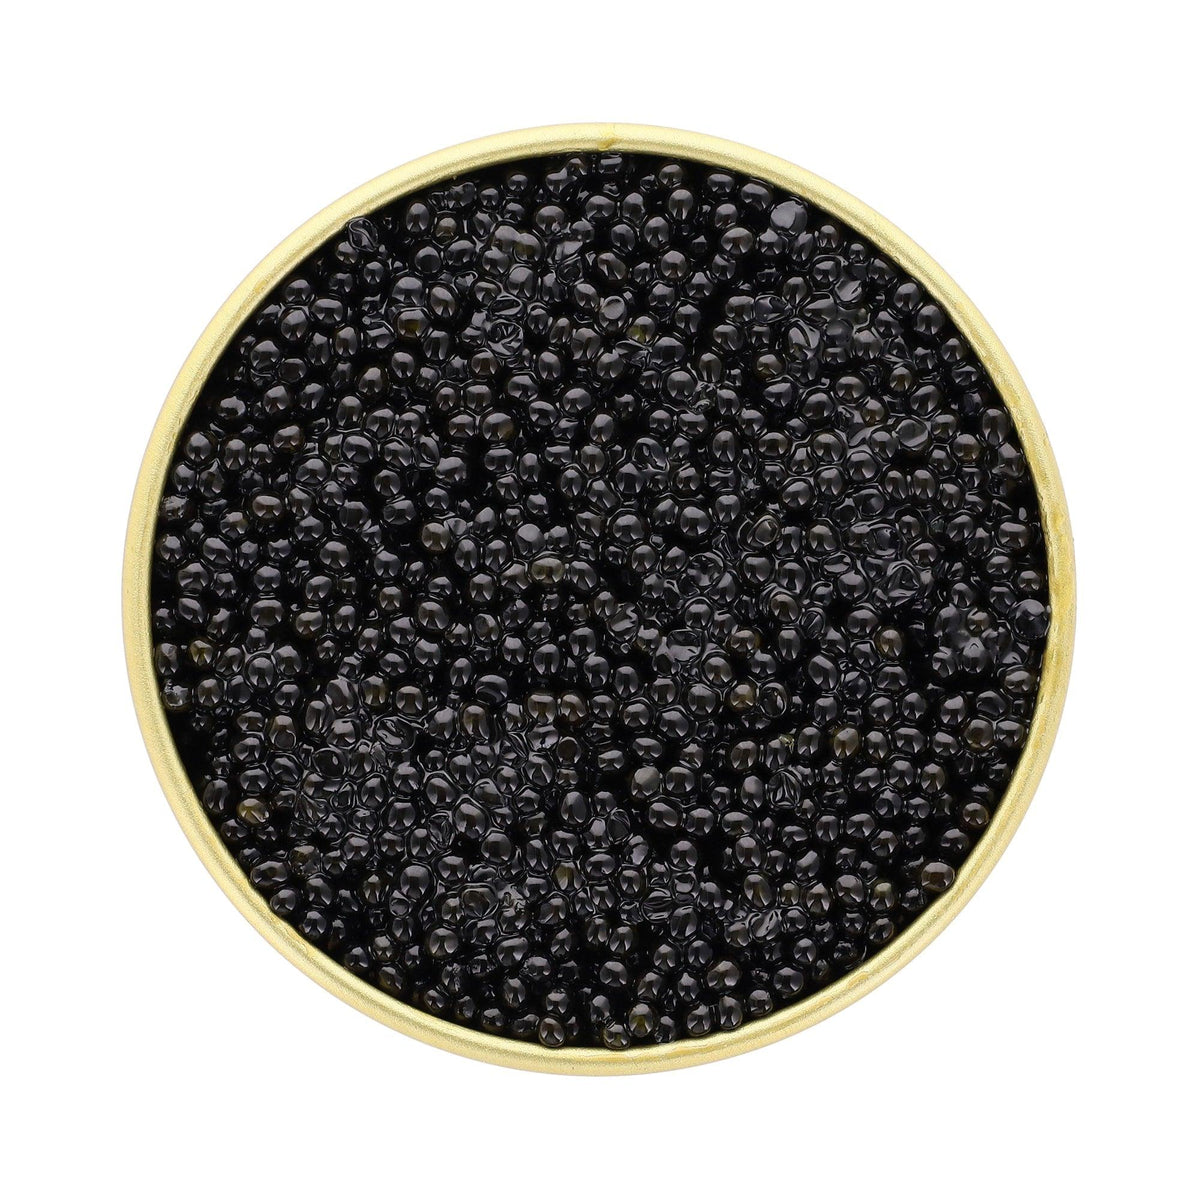 Hackleback - Petrovich Caviar 